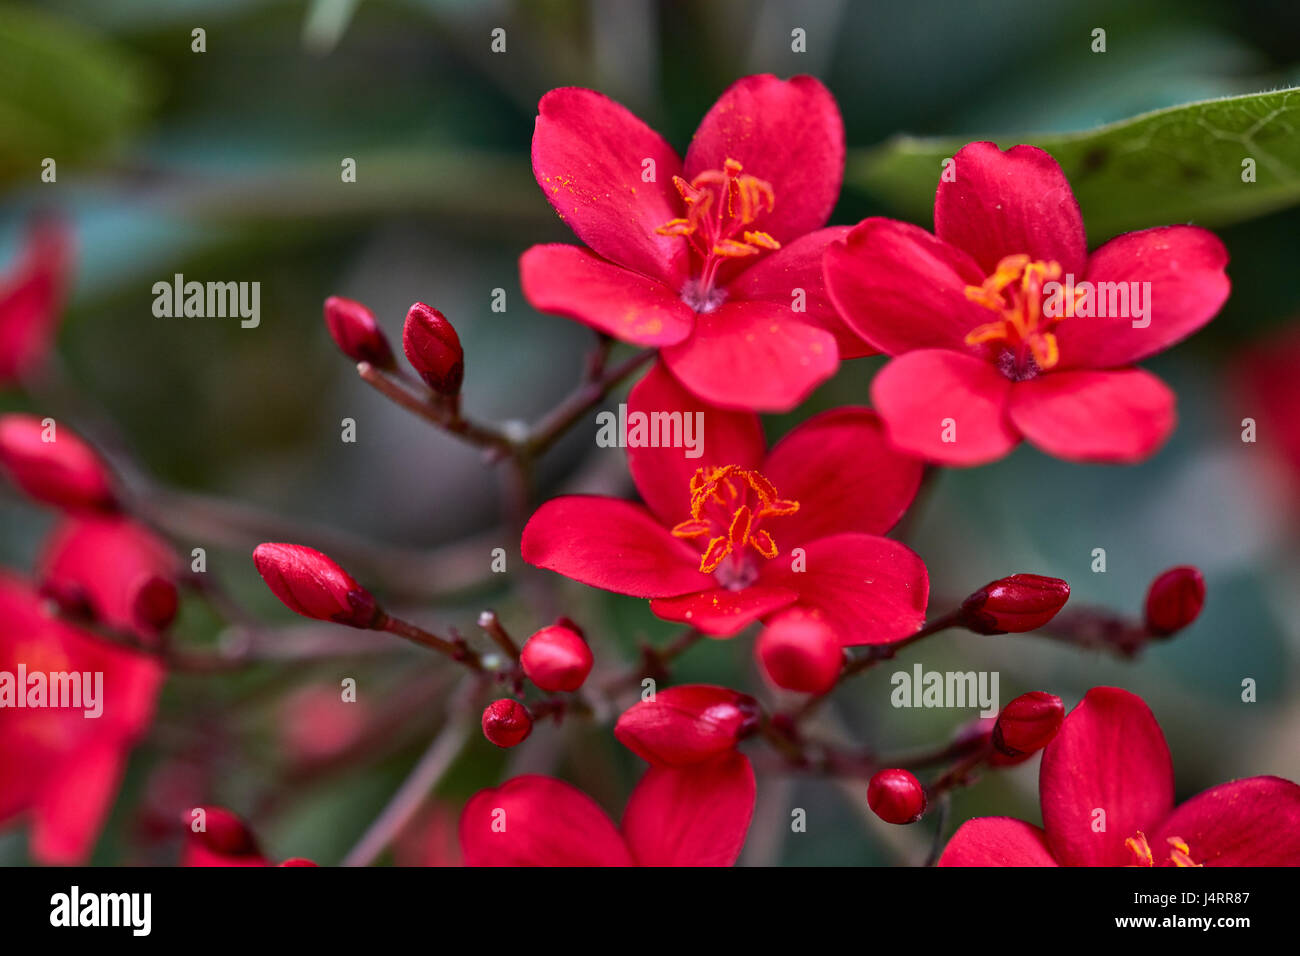 Jatropha colorful flower close up macro photo Stock Photo